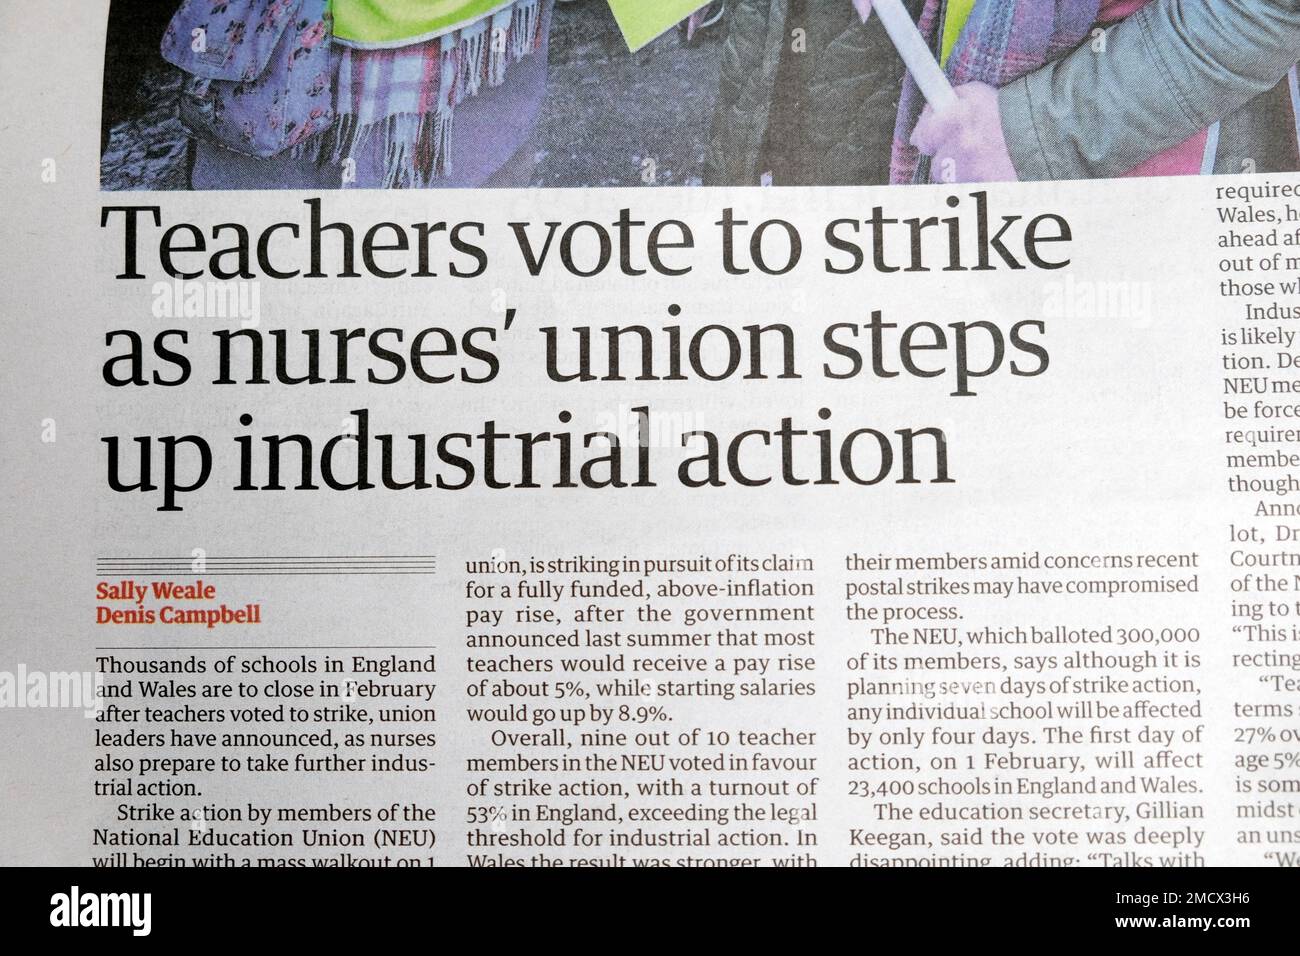 'Teachers vote to strike as nurses' union steps up industrial action' Guardian newspaper headline schools article cutting on 17 January 2023 London UK Stock Photo